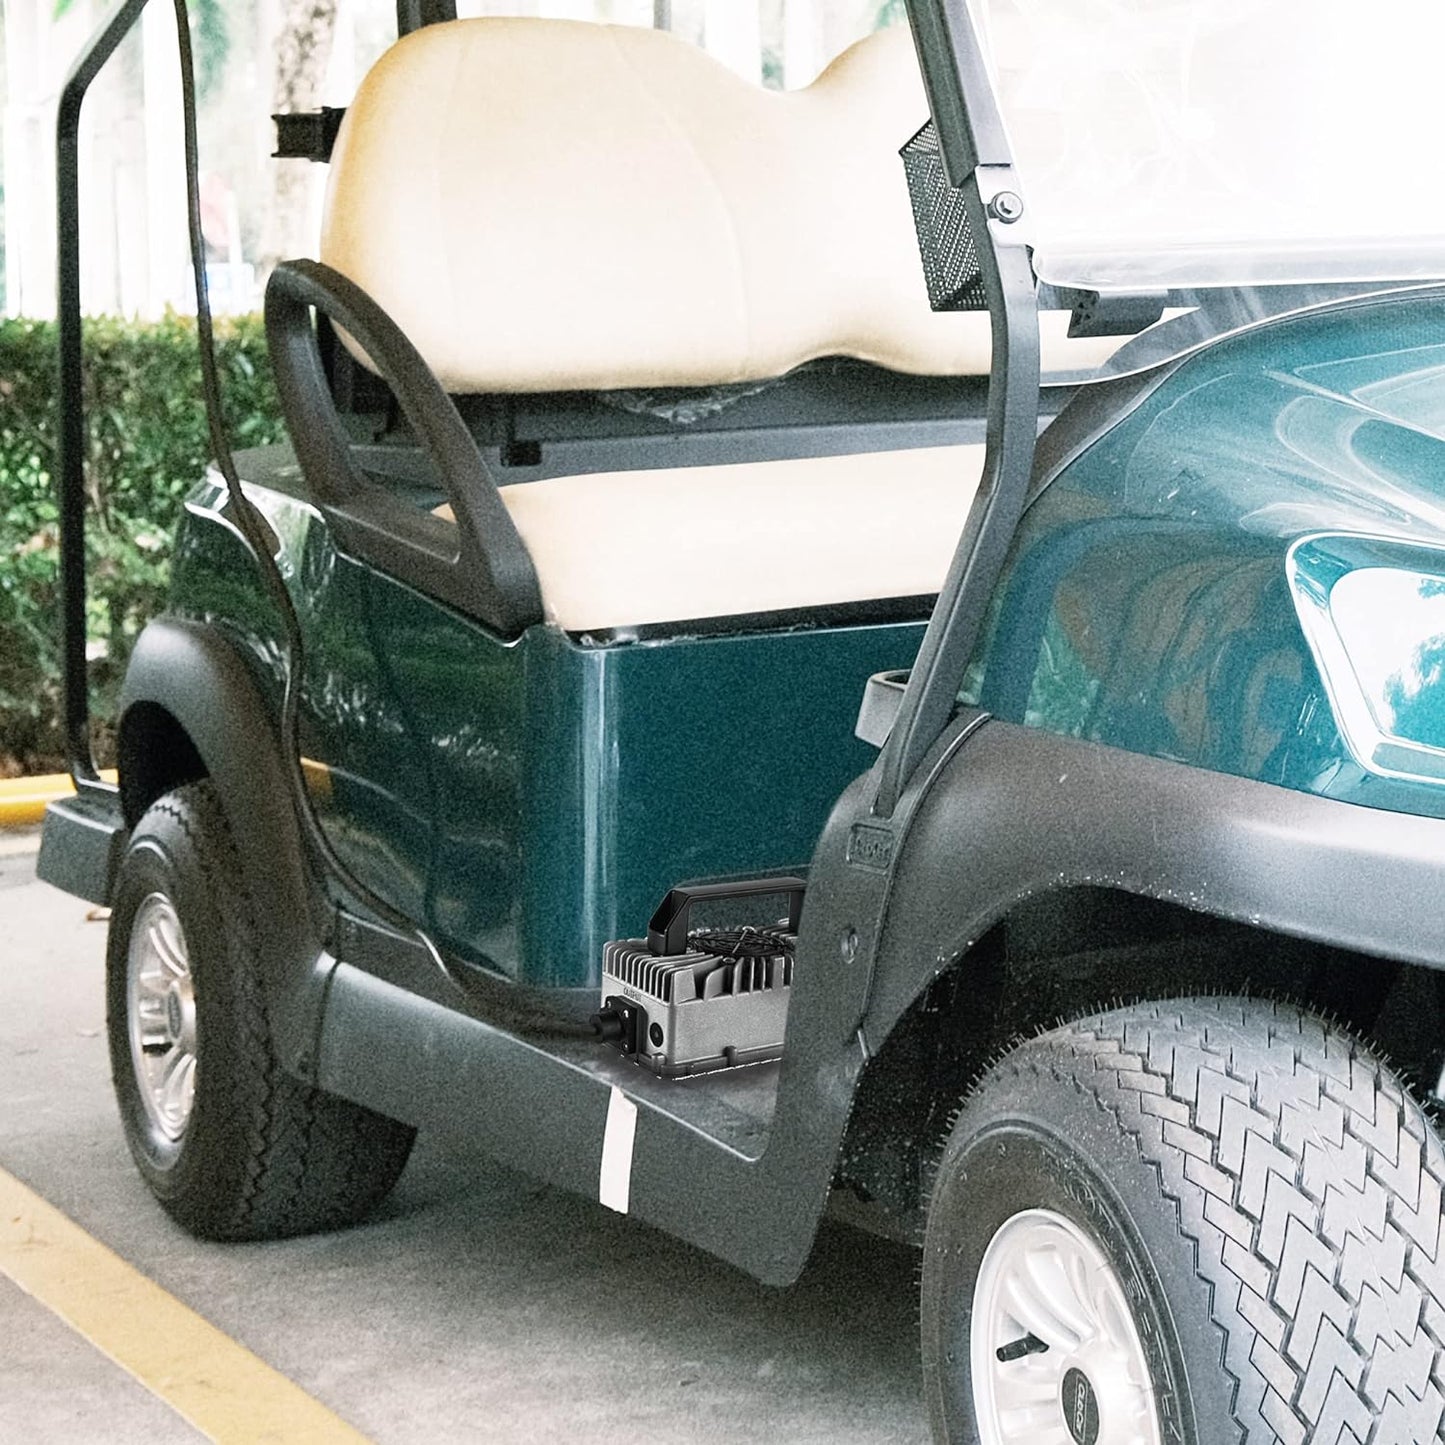 YILEIDE E800W Seris 36V18A Golf Cart Battery Charger On-Board with OT (M8: 14-8 terminals) for 36V Lead-Acid EZGO/Clubcar/Yamaha Golf Carts